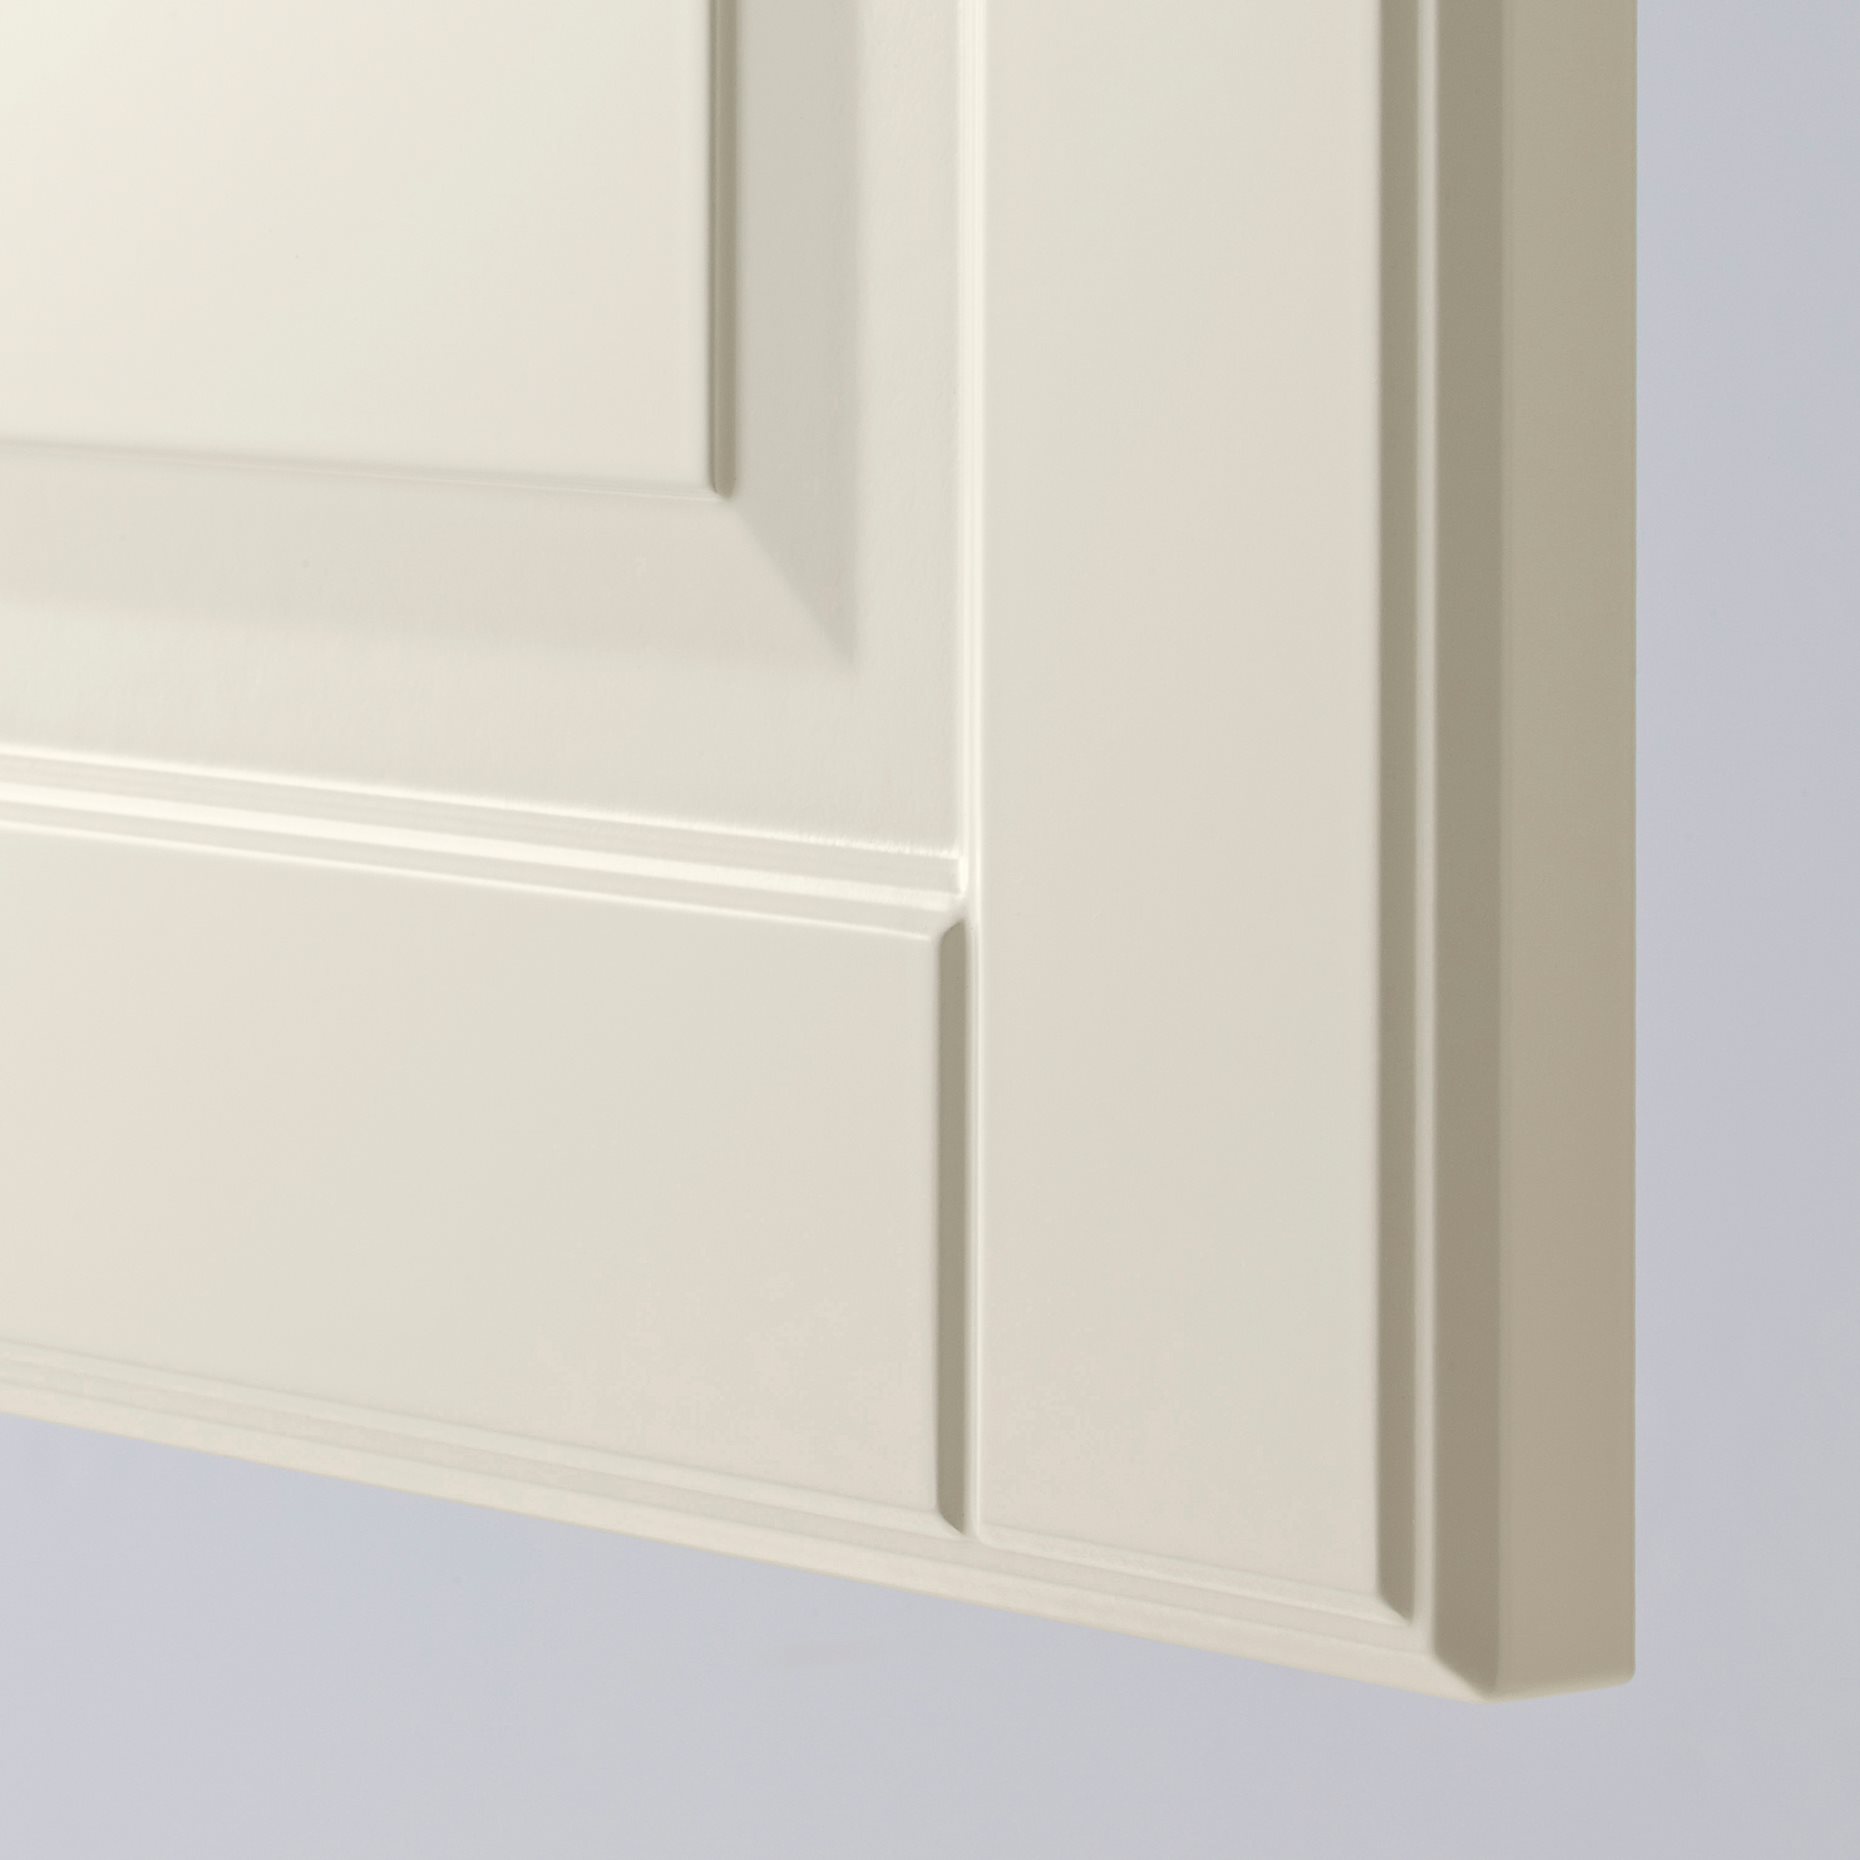 METOD, ψηλό ντουλάπι με ράφια/2 πόρτες, 60x60x220 cm, 294.596.39